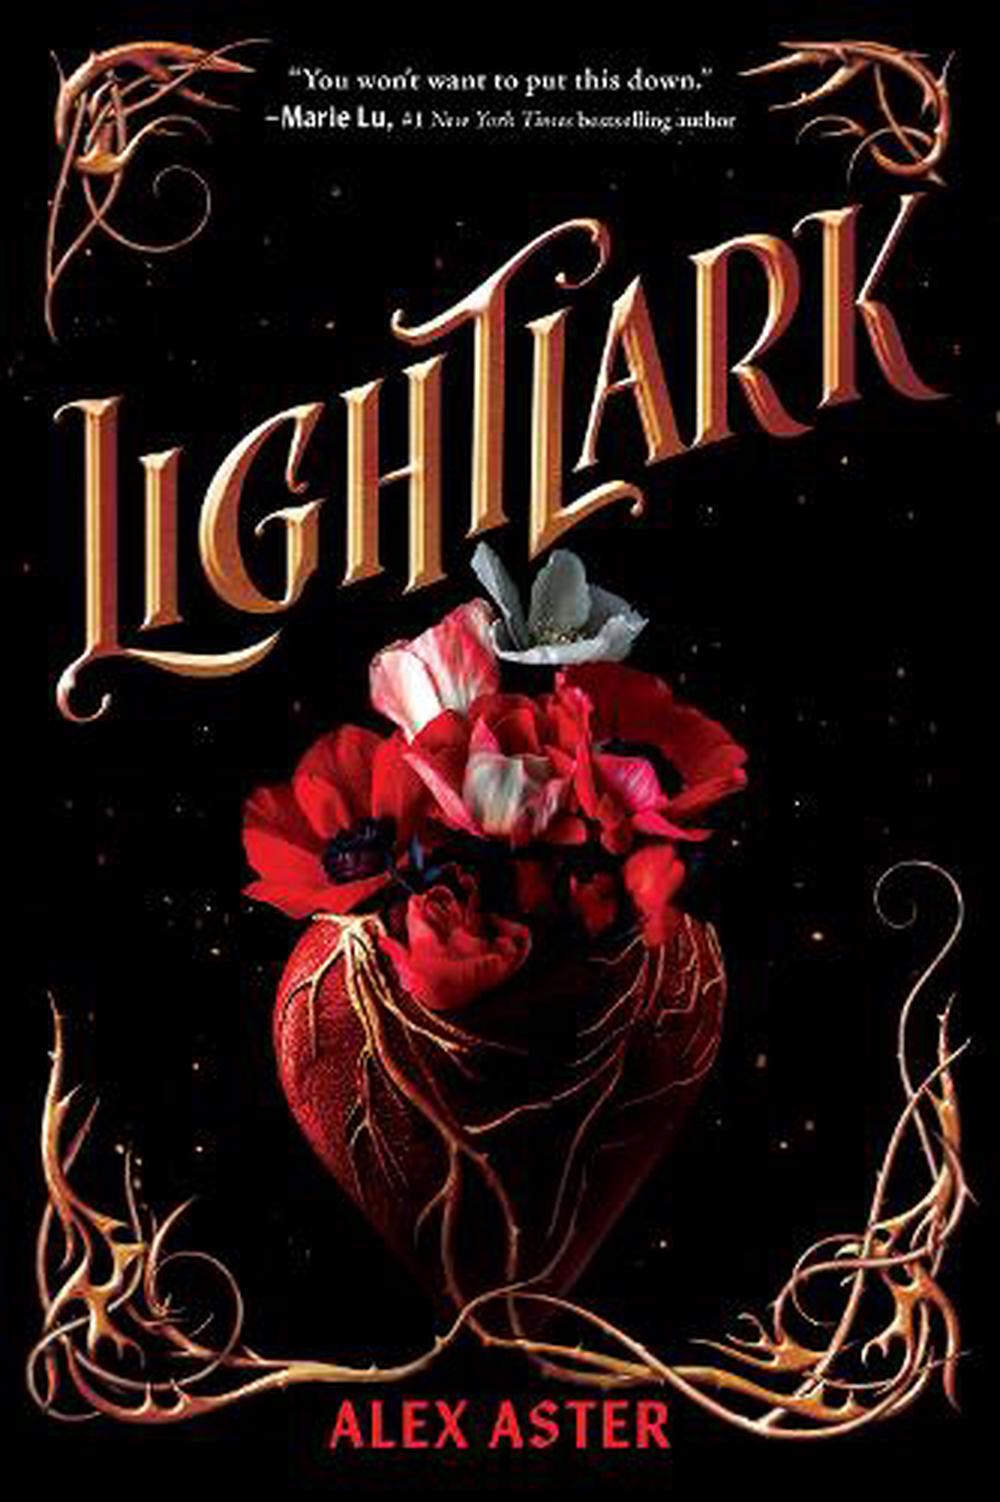 Lightlark (The Lightlark Saga Book 1) by Alex Aster (English) Hardcover Book - Picture 1 of 1